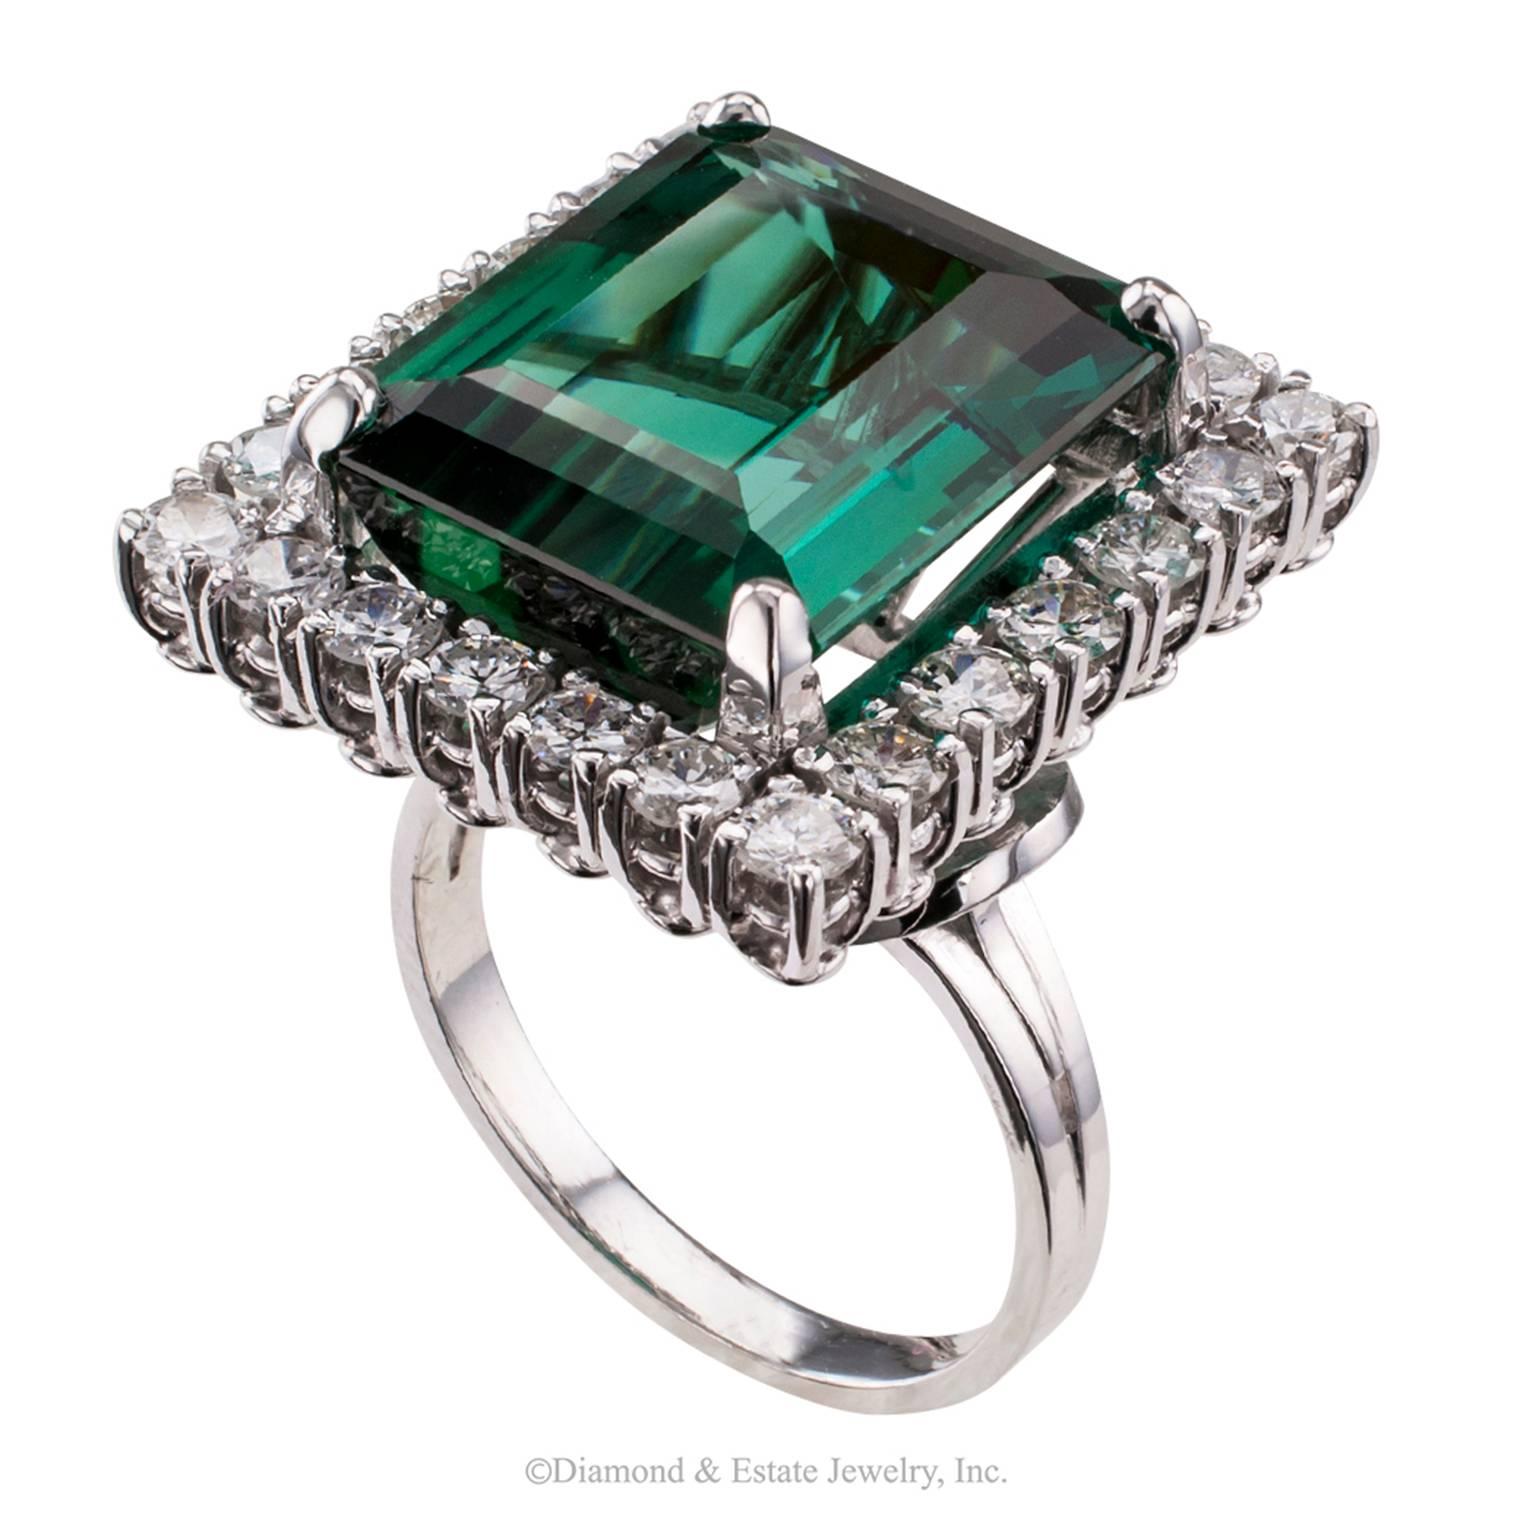 Modern 1960s Emerald Cut Blue Green Tourmaline Diamond Cocktail Ring